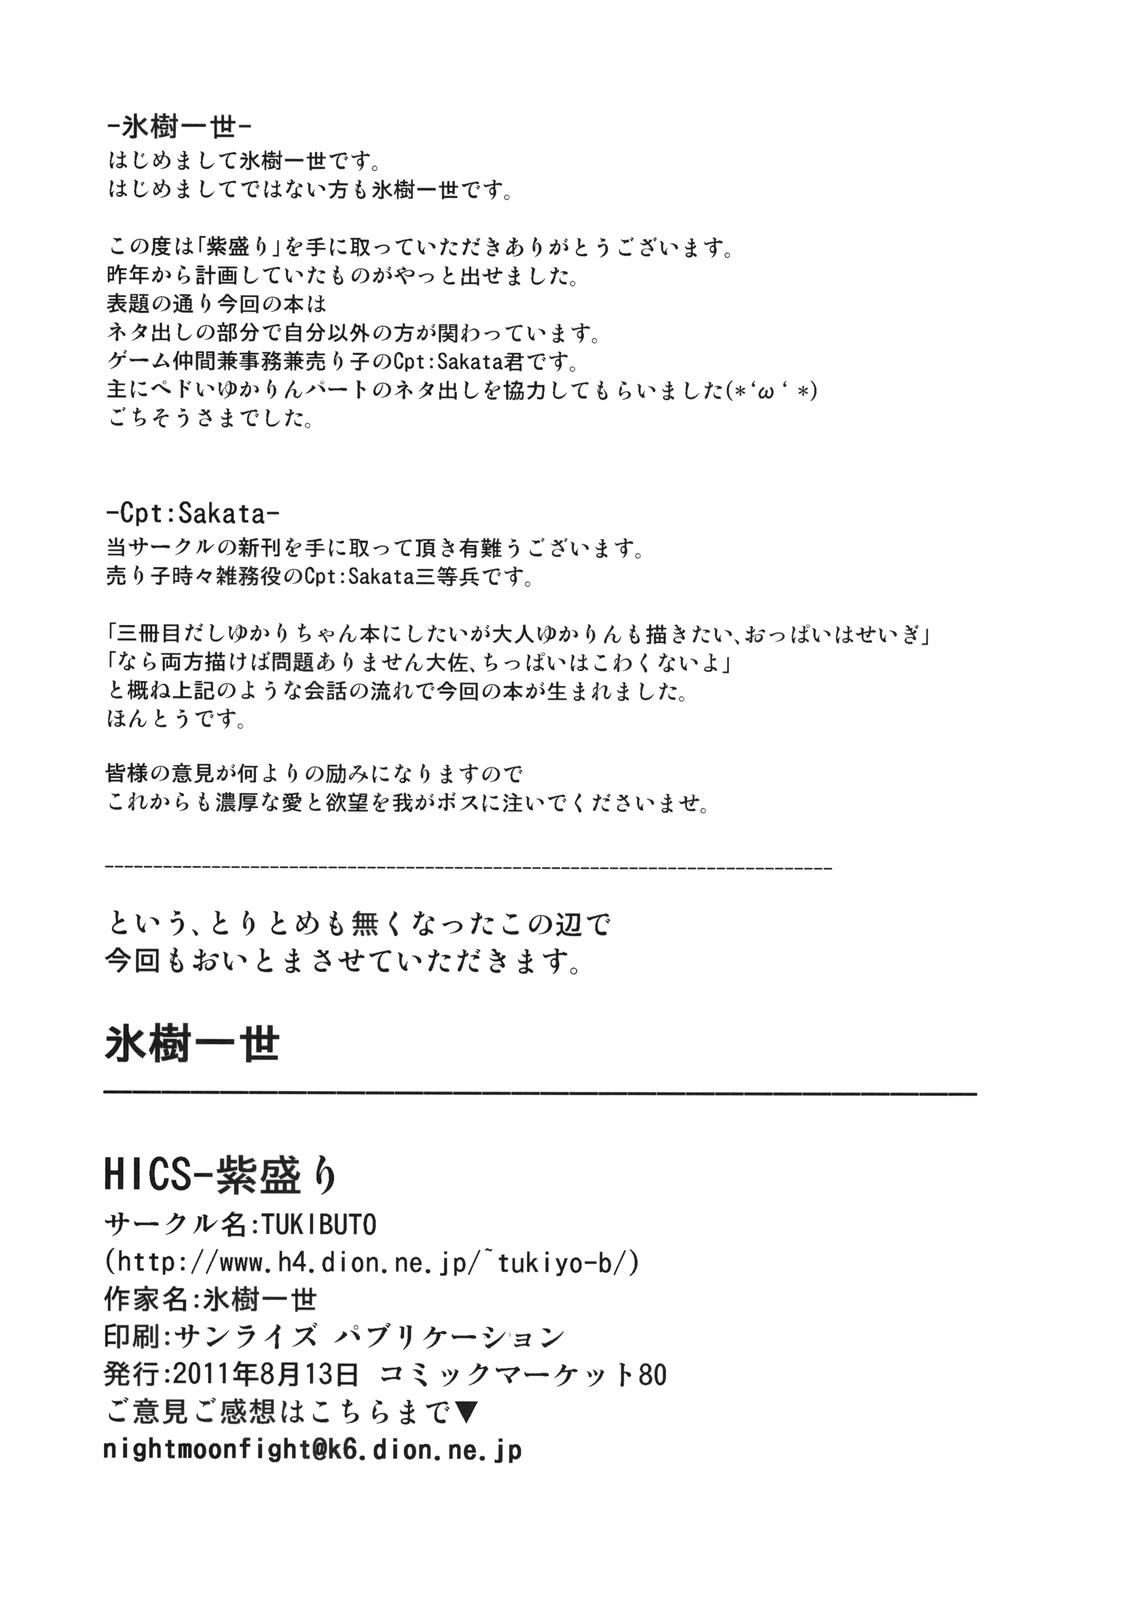 HICS-Yukari Mori 25